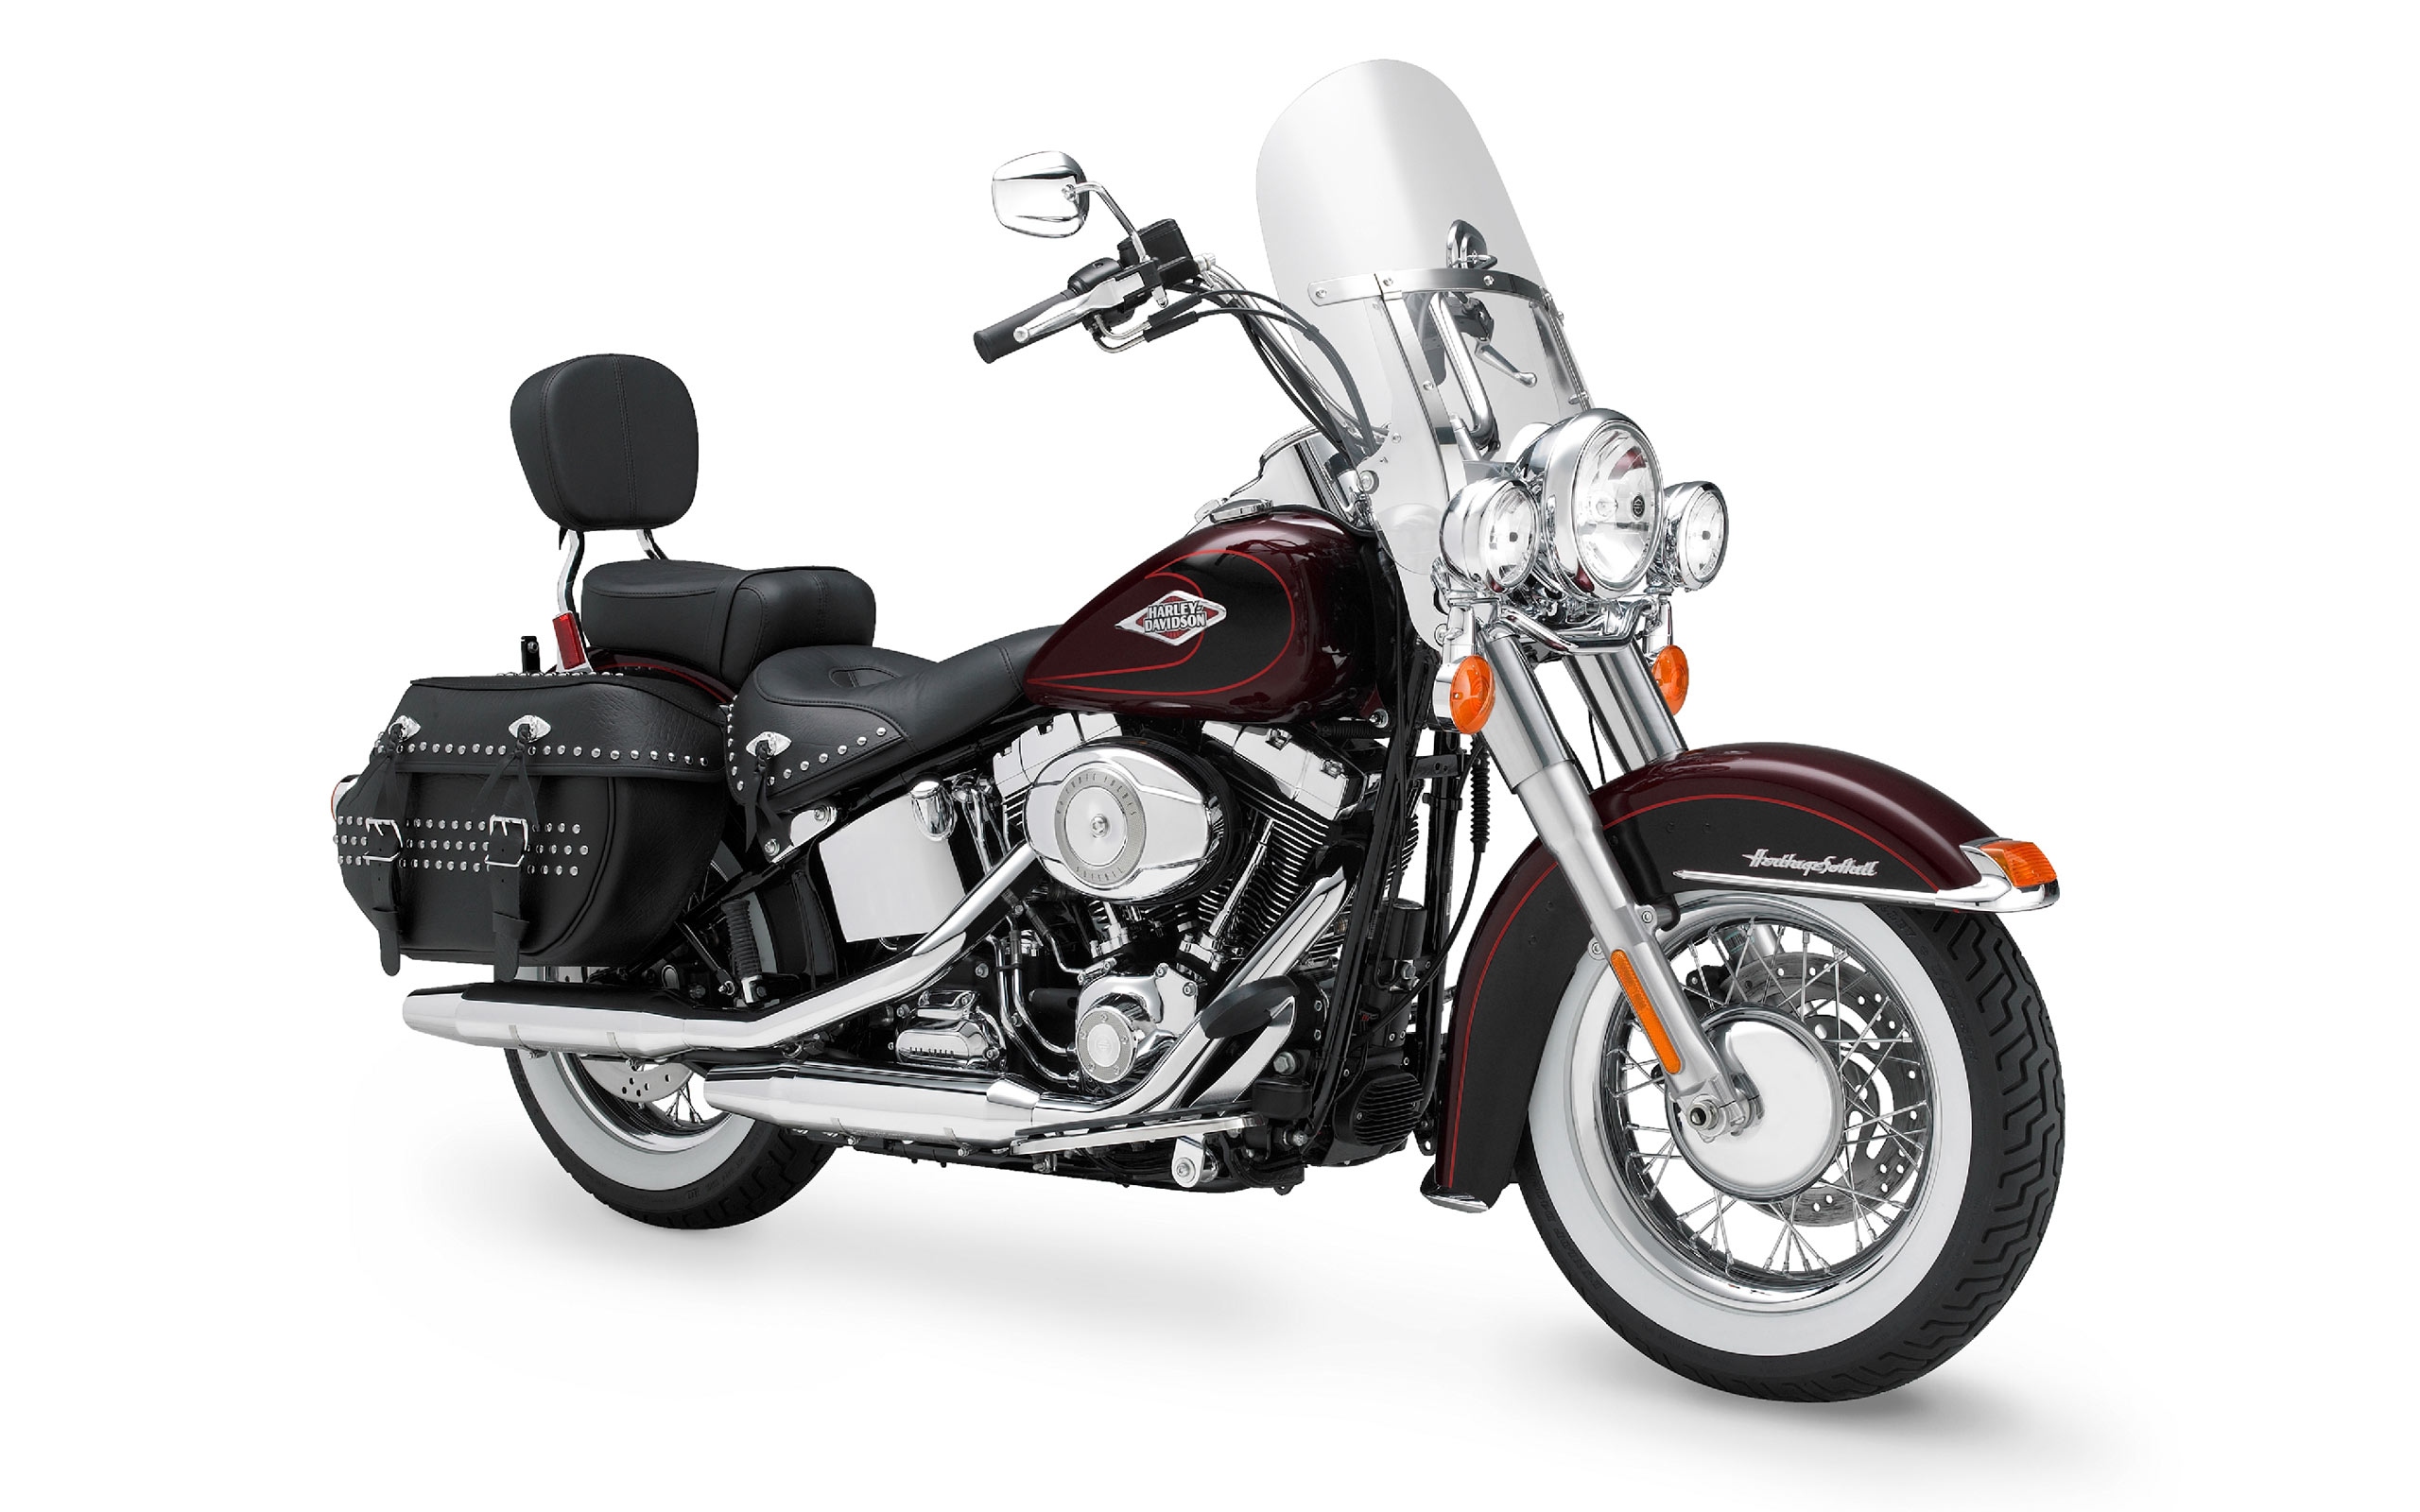 Harley Davidson Flstc Softail Heritage 2011 Hd Wallpaper Background Image 2560x1600